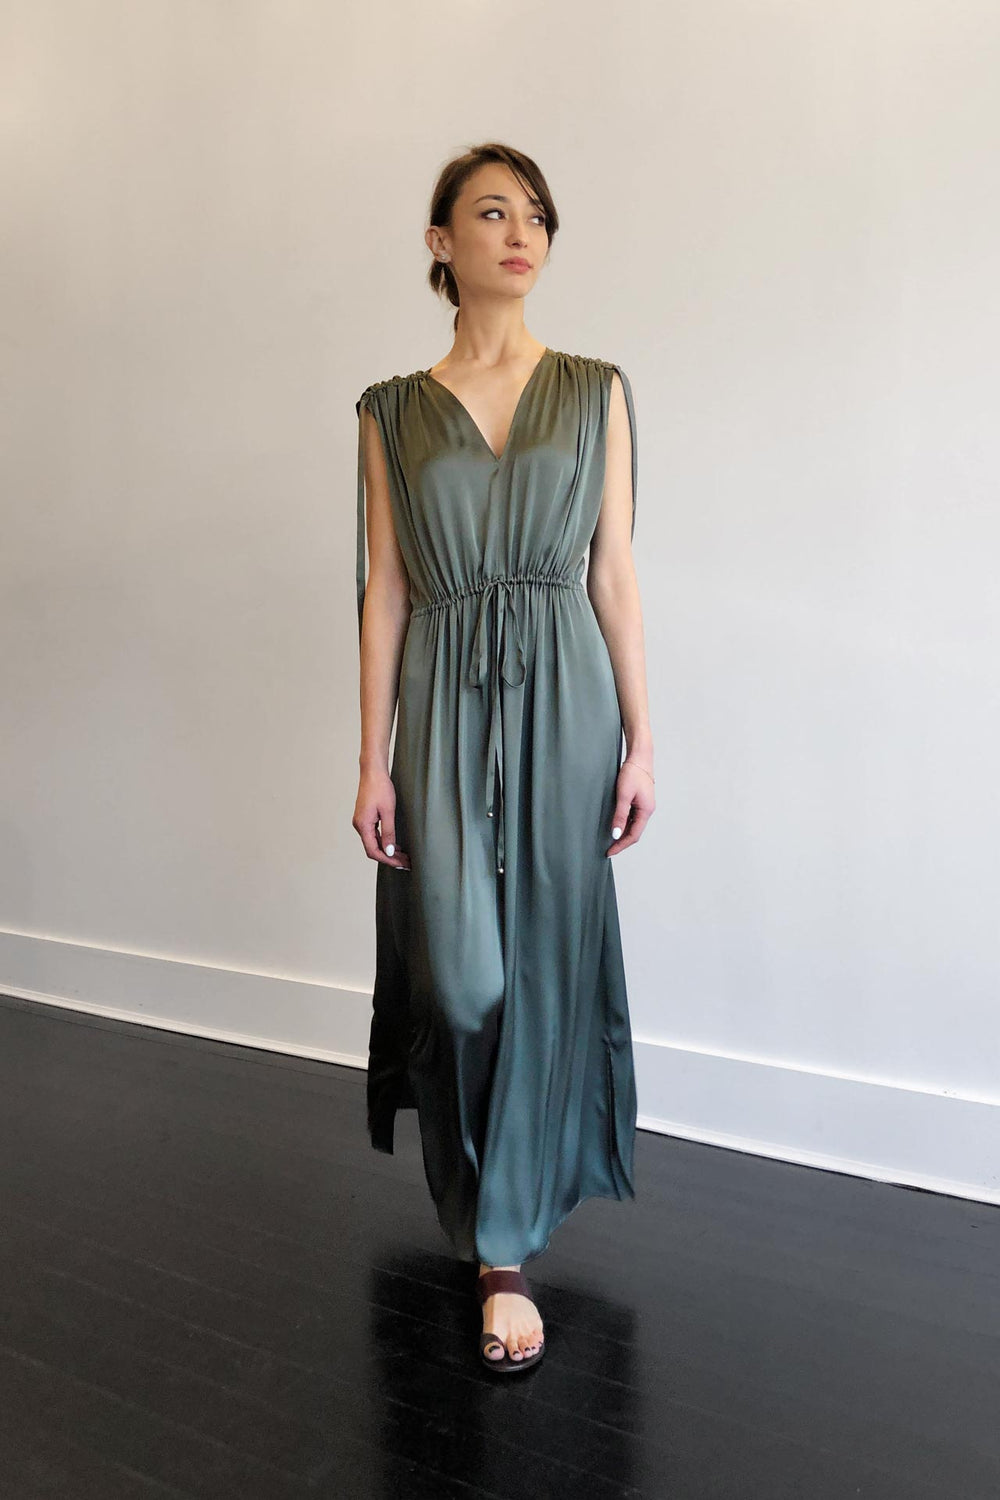 Fashion Designer CARL KAPP collection | Voyager Onesize Fits All formal dress grey | Sydney Australia